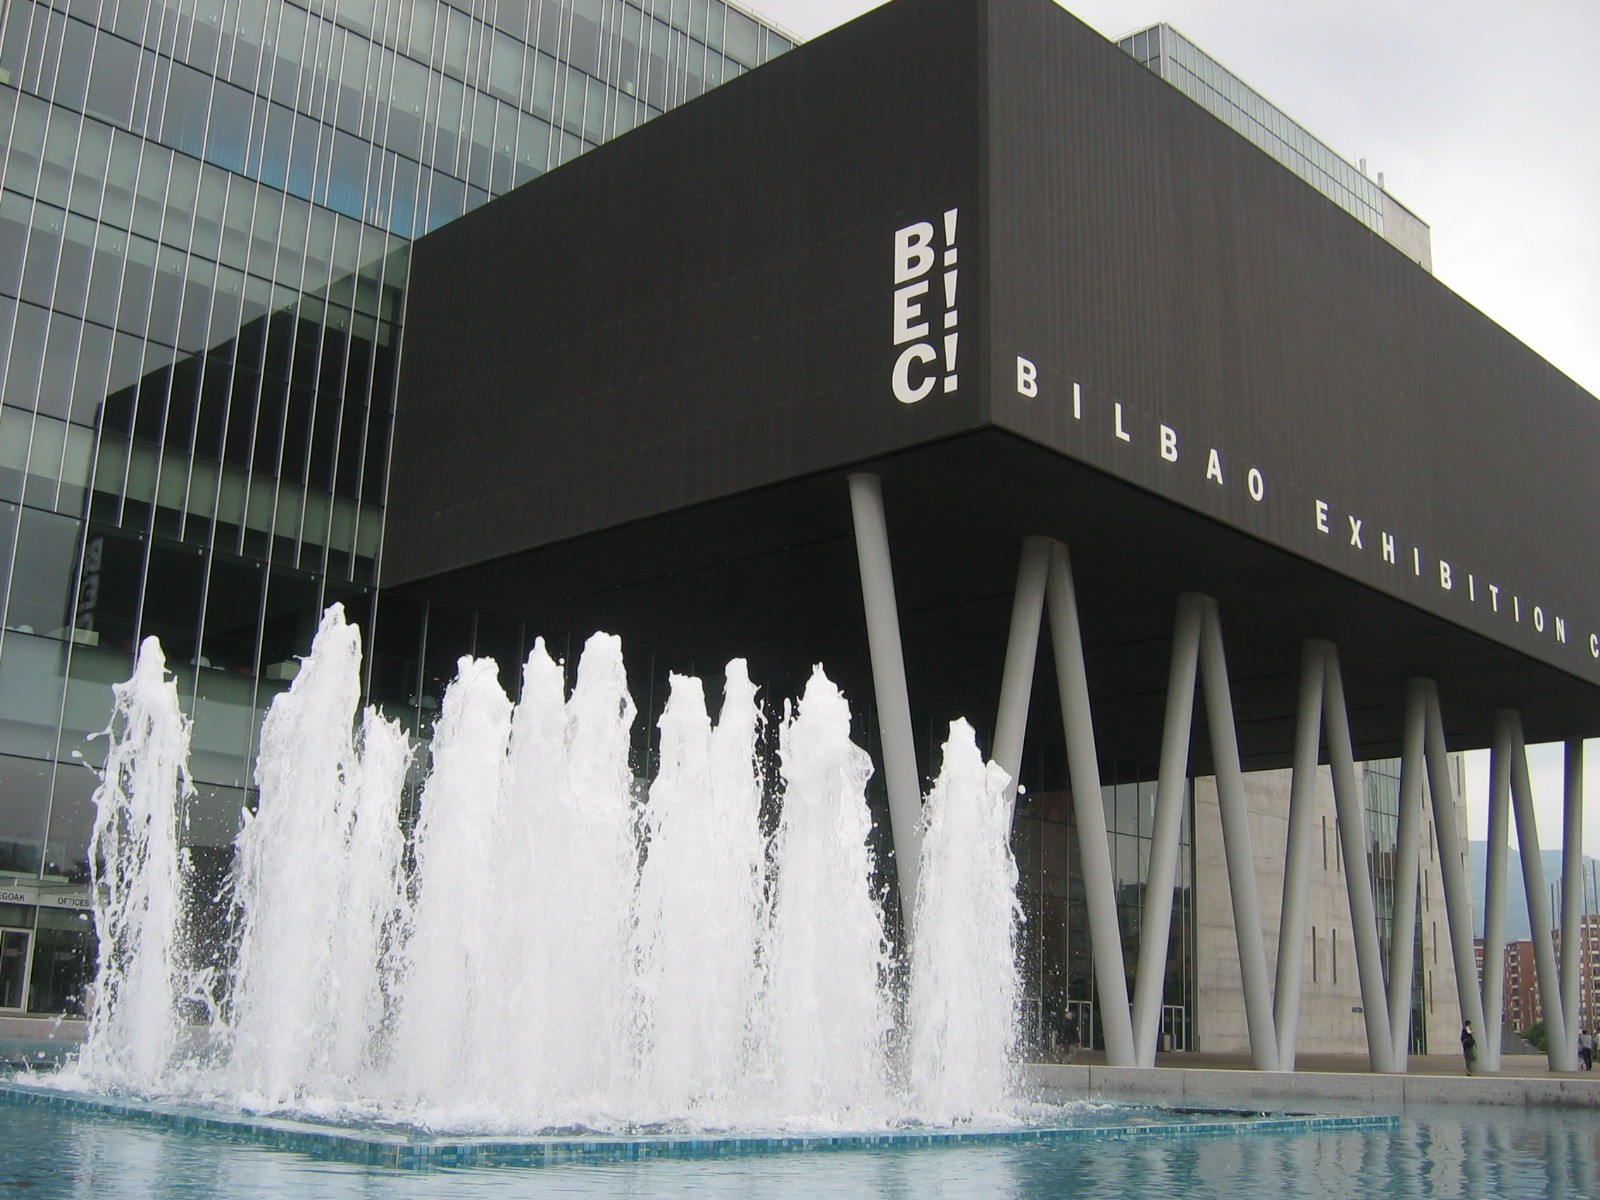 Bilbao Exhibition Centre "BEC"